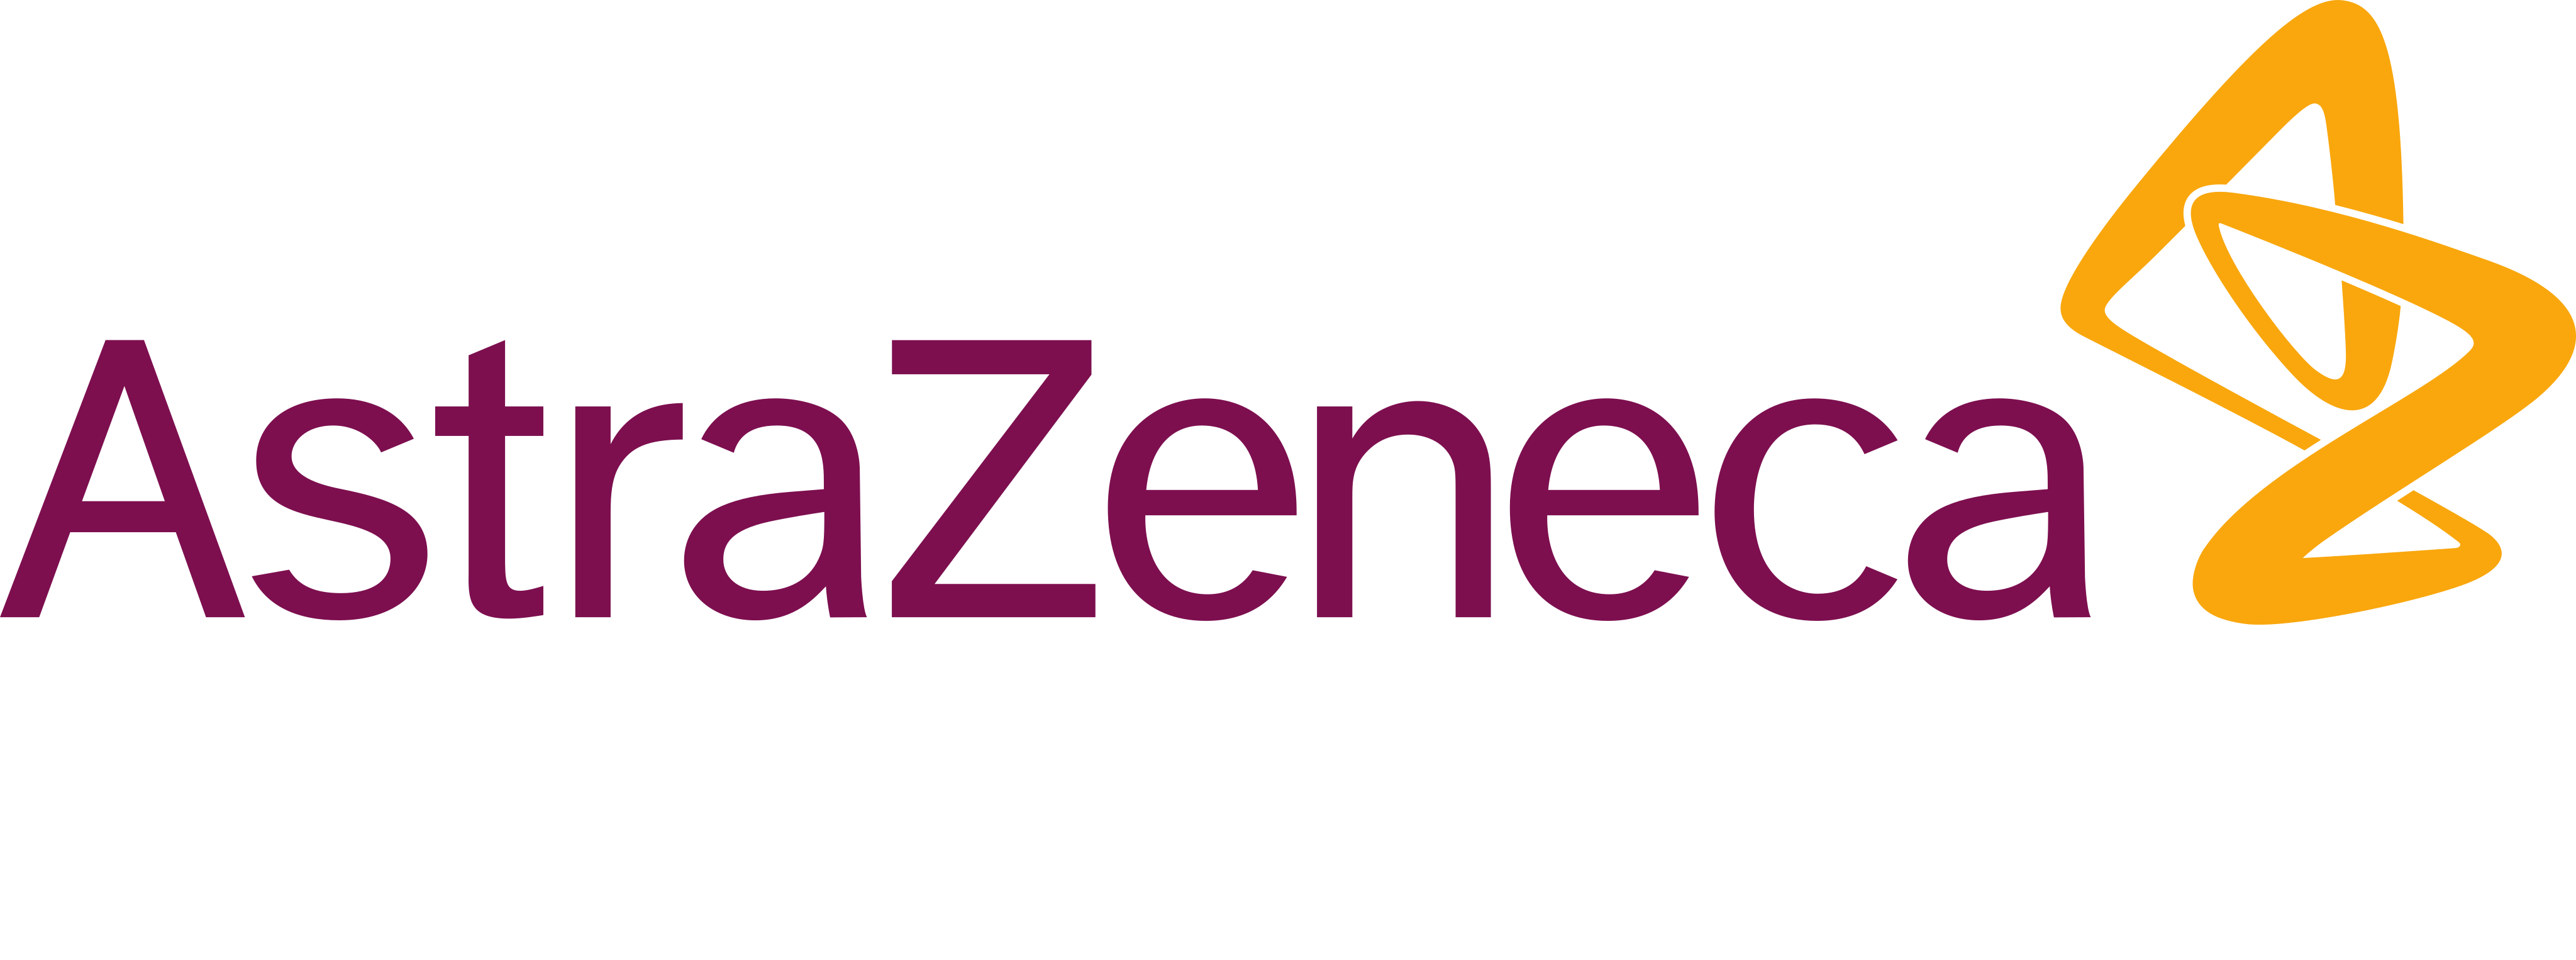 astrazeneca-logo (1)